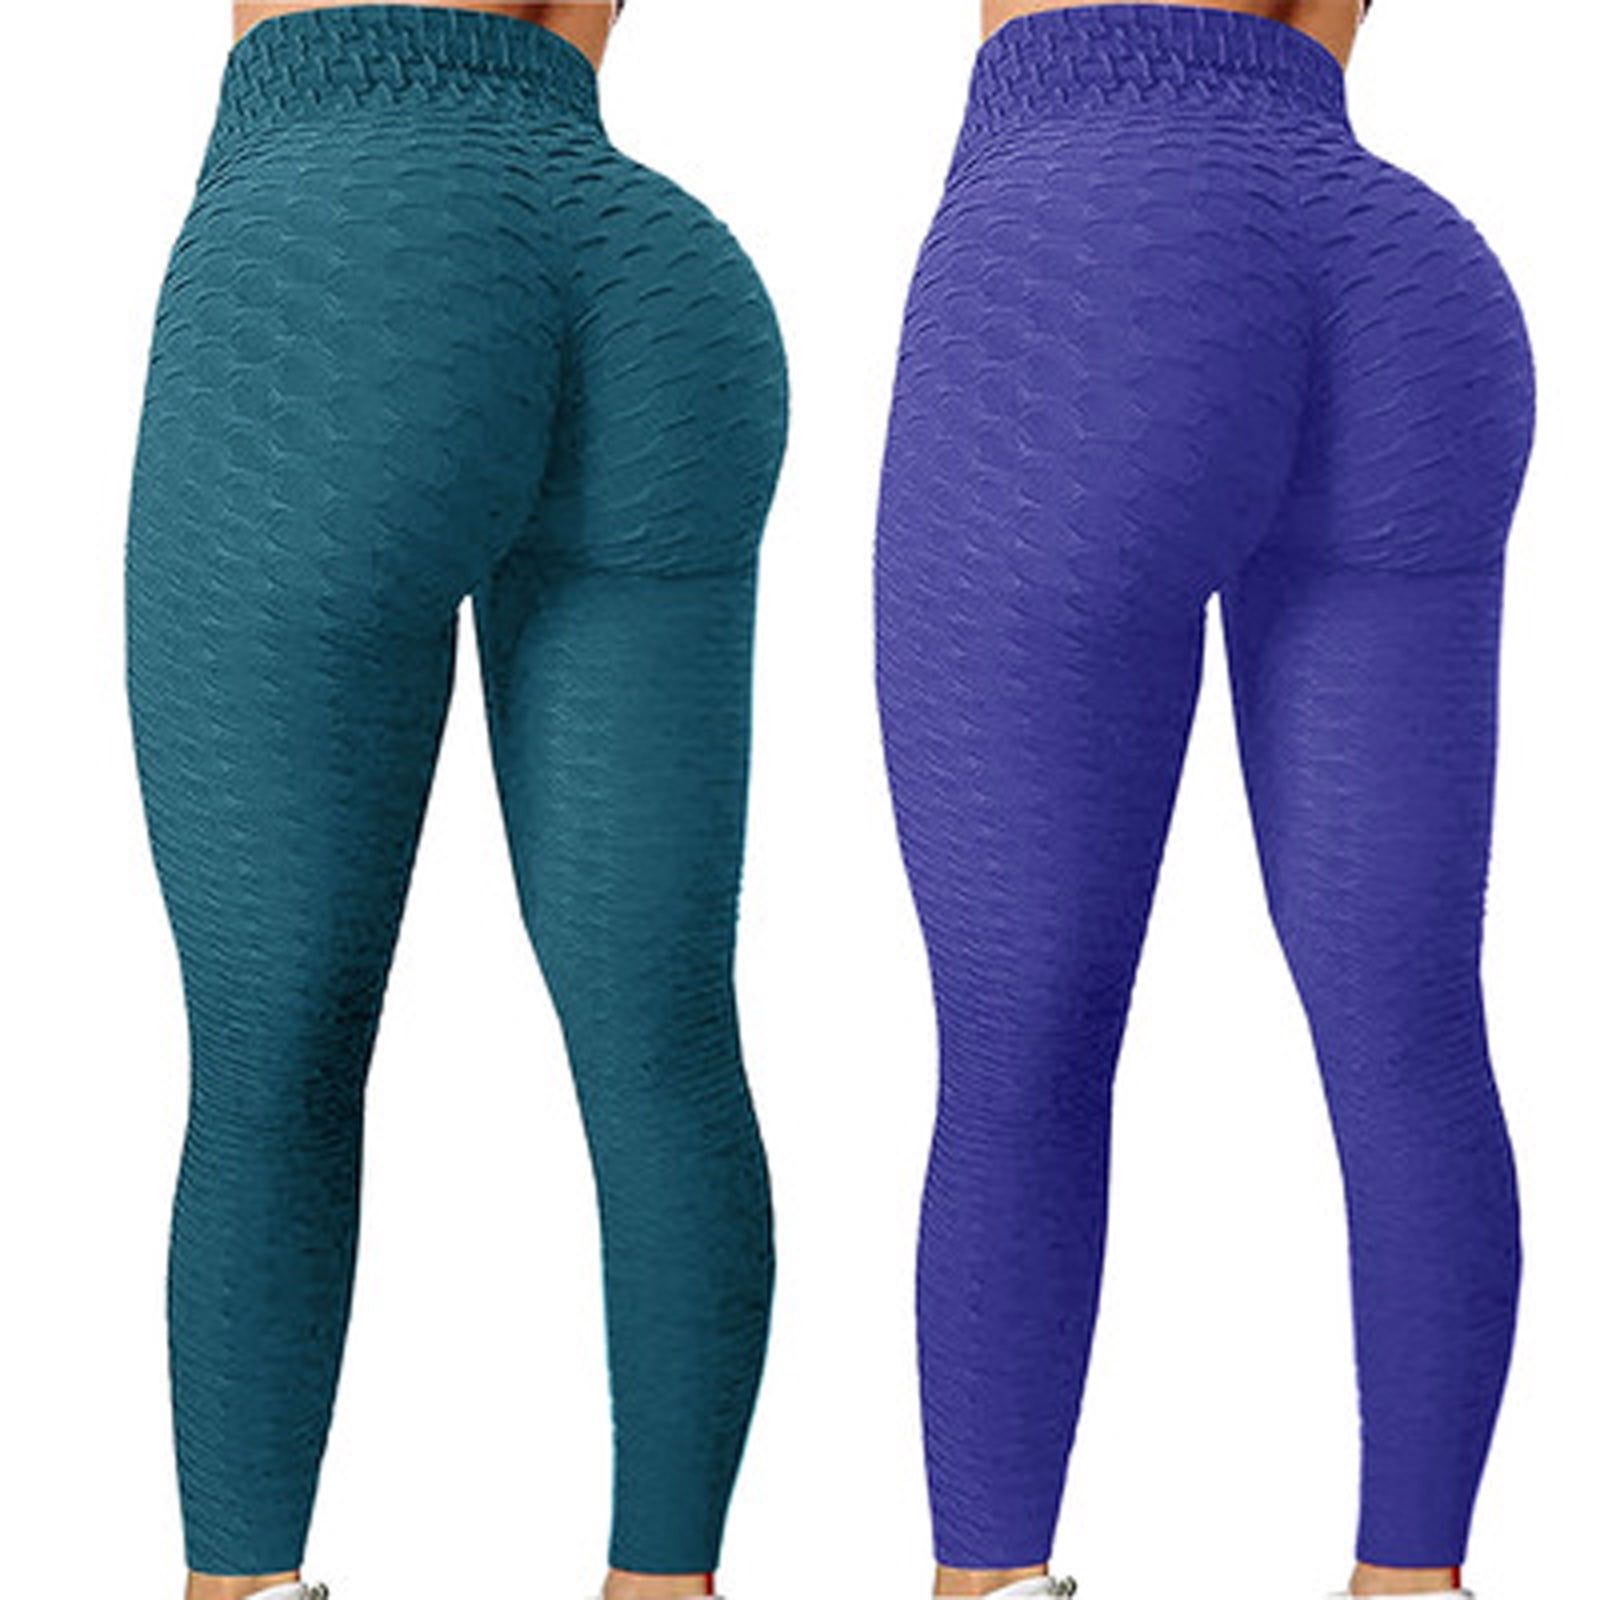 Samickarr plus size leggings for women Stretchy tummy control Butt